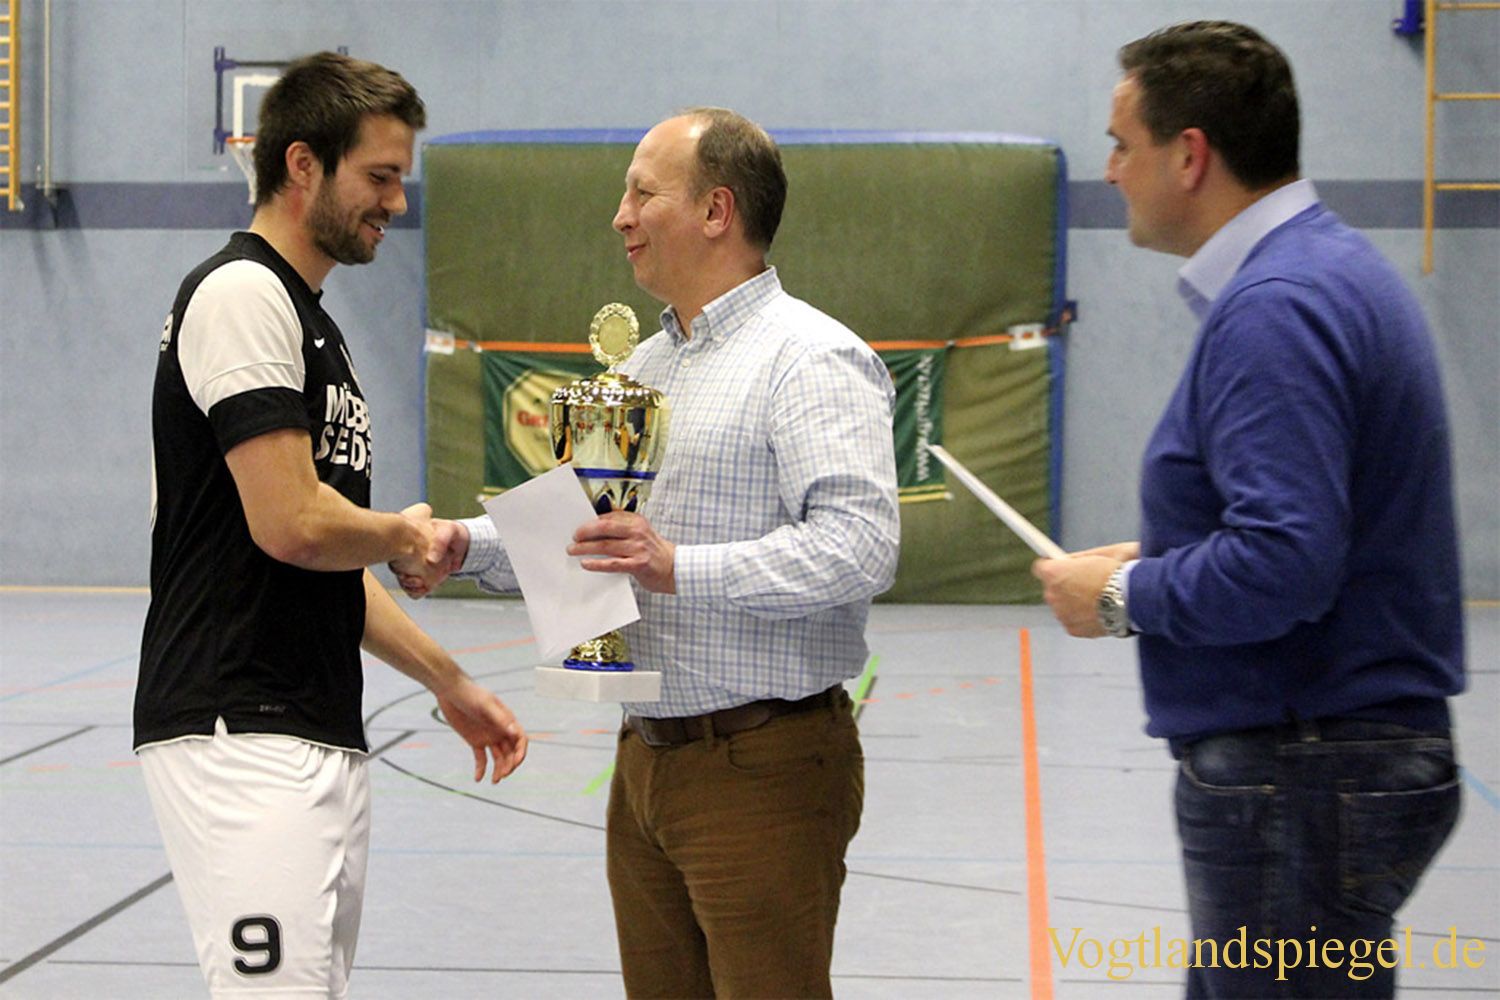 Schloß-Pils-Pokal der Vereinsbrauerei Greiz 2014